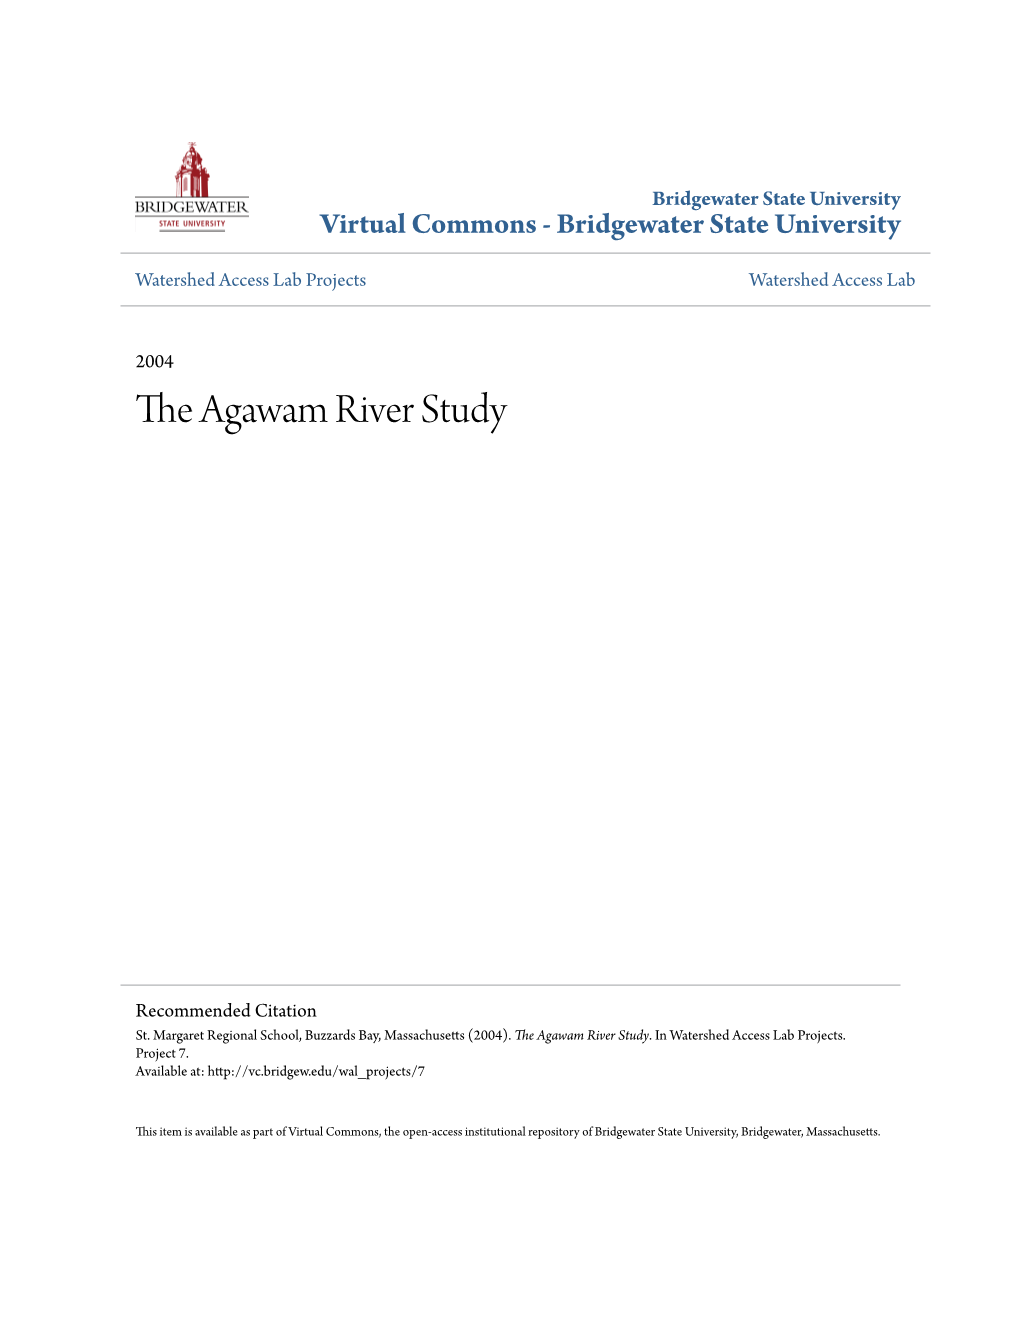 The Agawam River Study